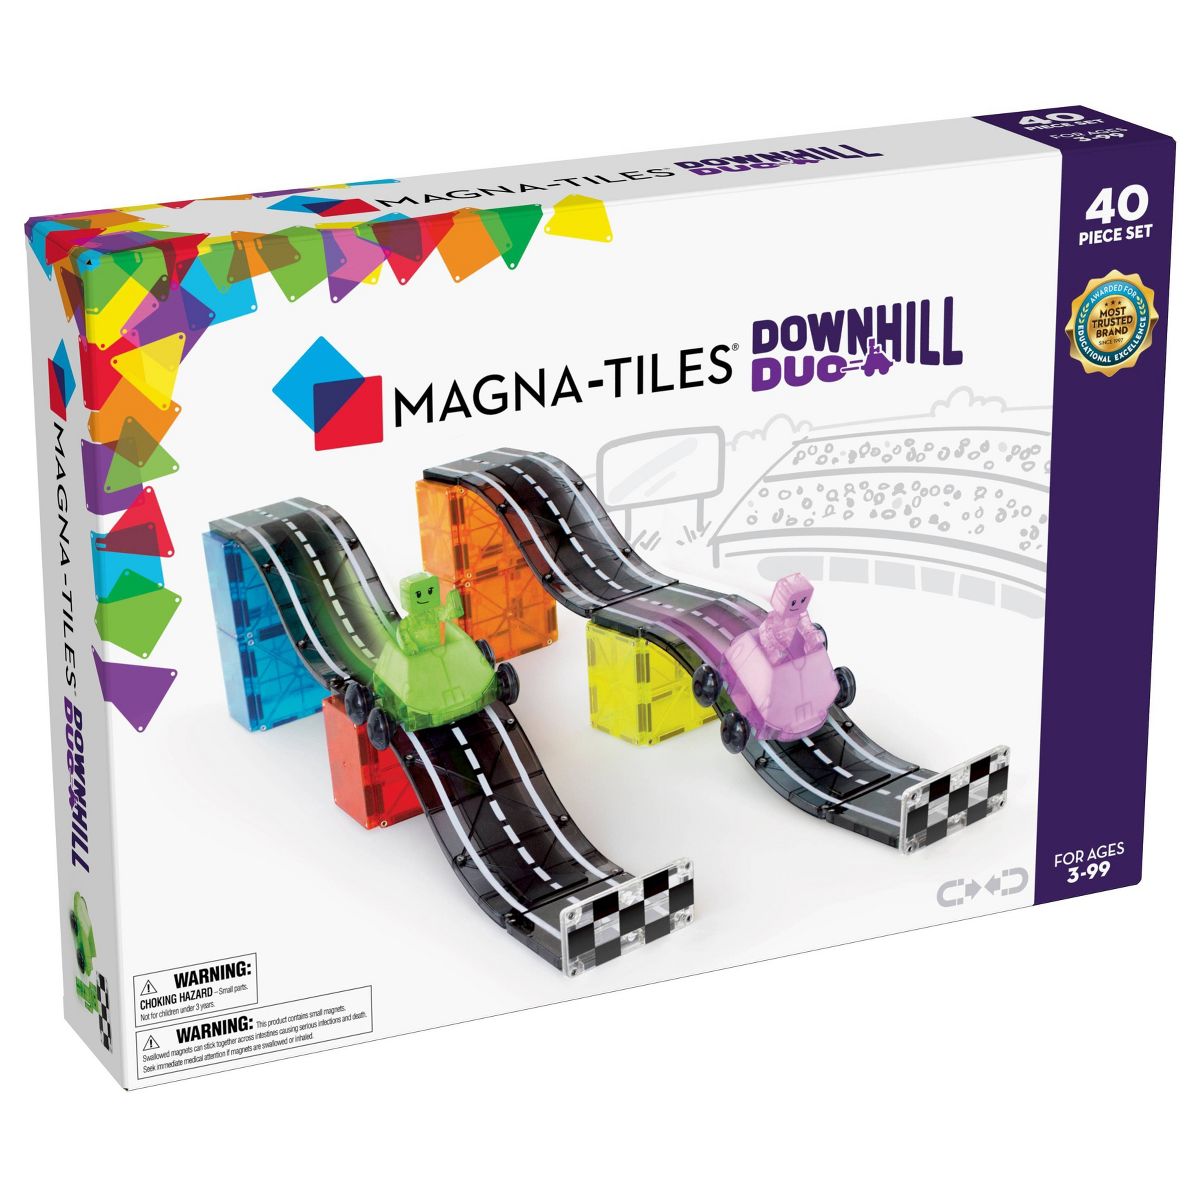 Magnatiles Downhill Duo 40-Piece Set